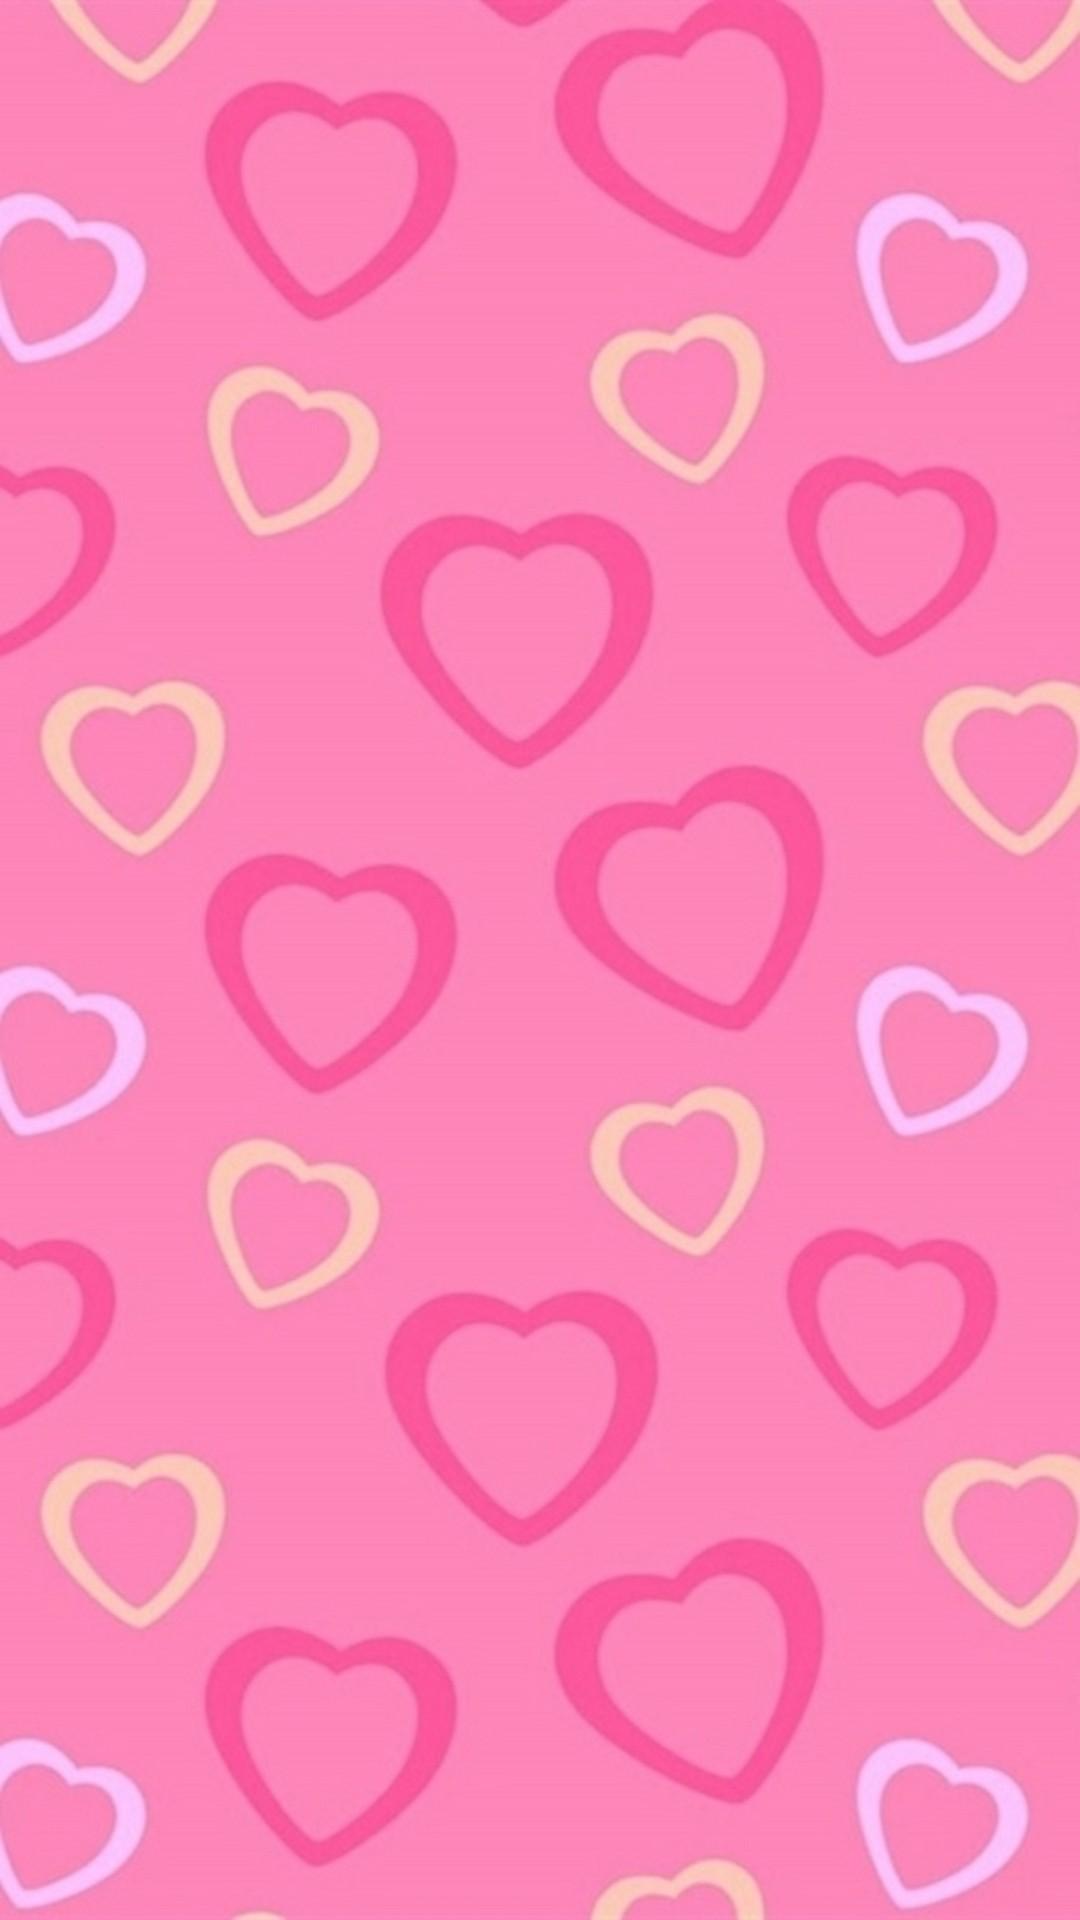 Cute Pink Hd Wallpapers